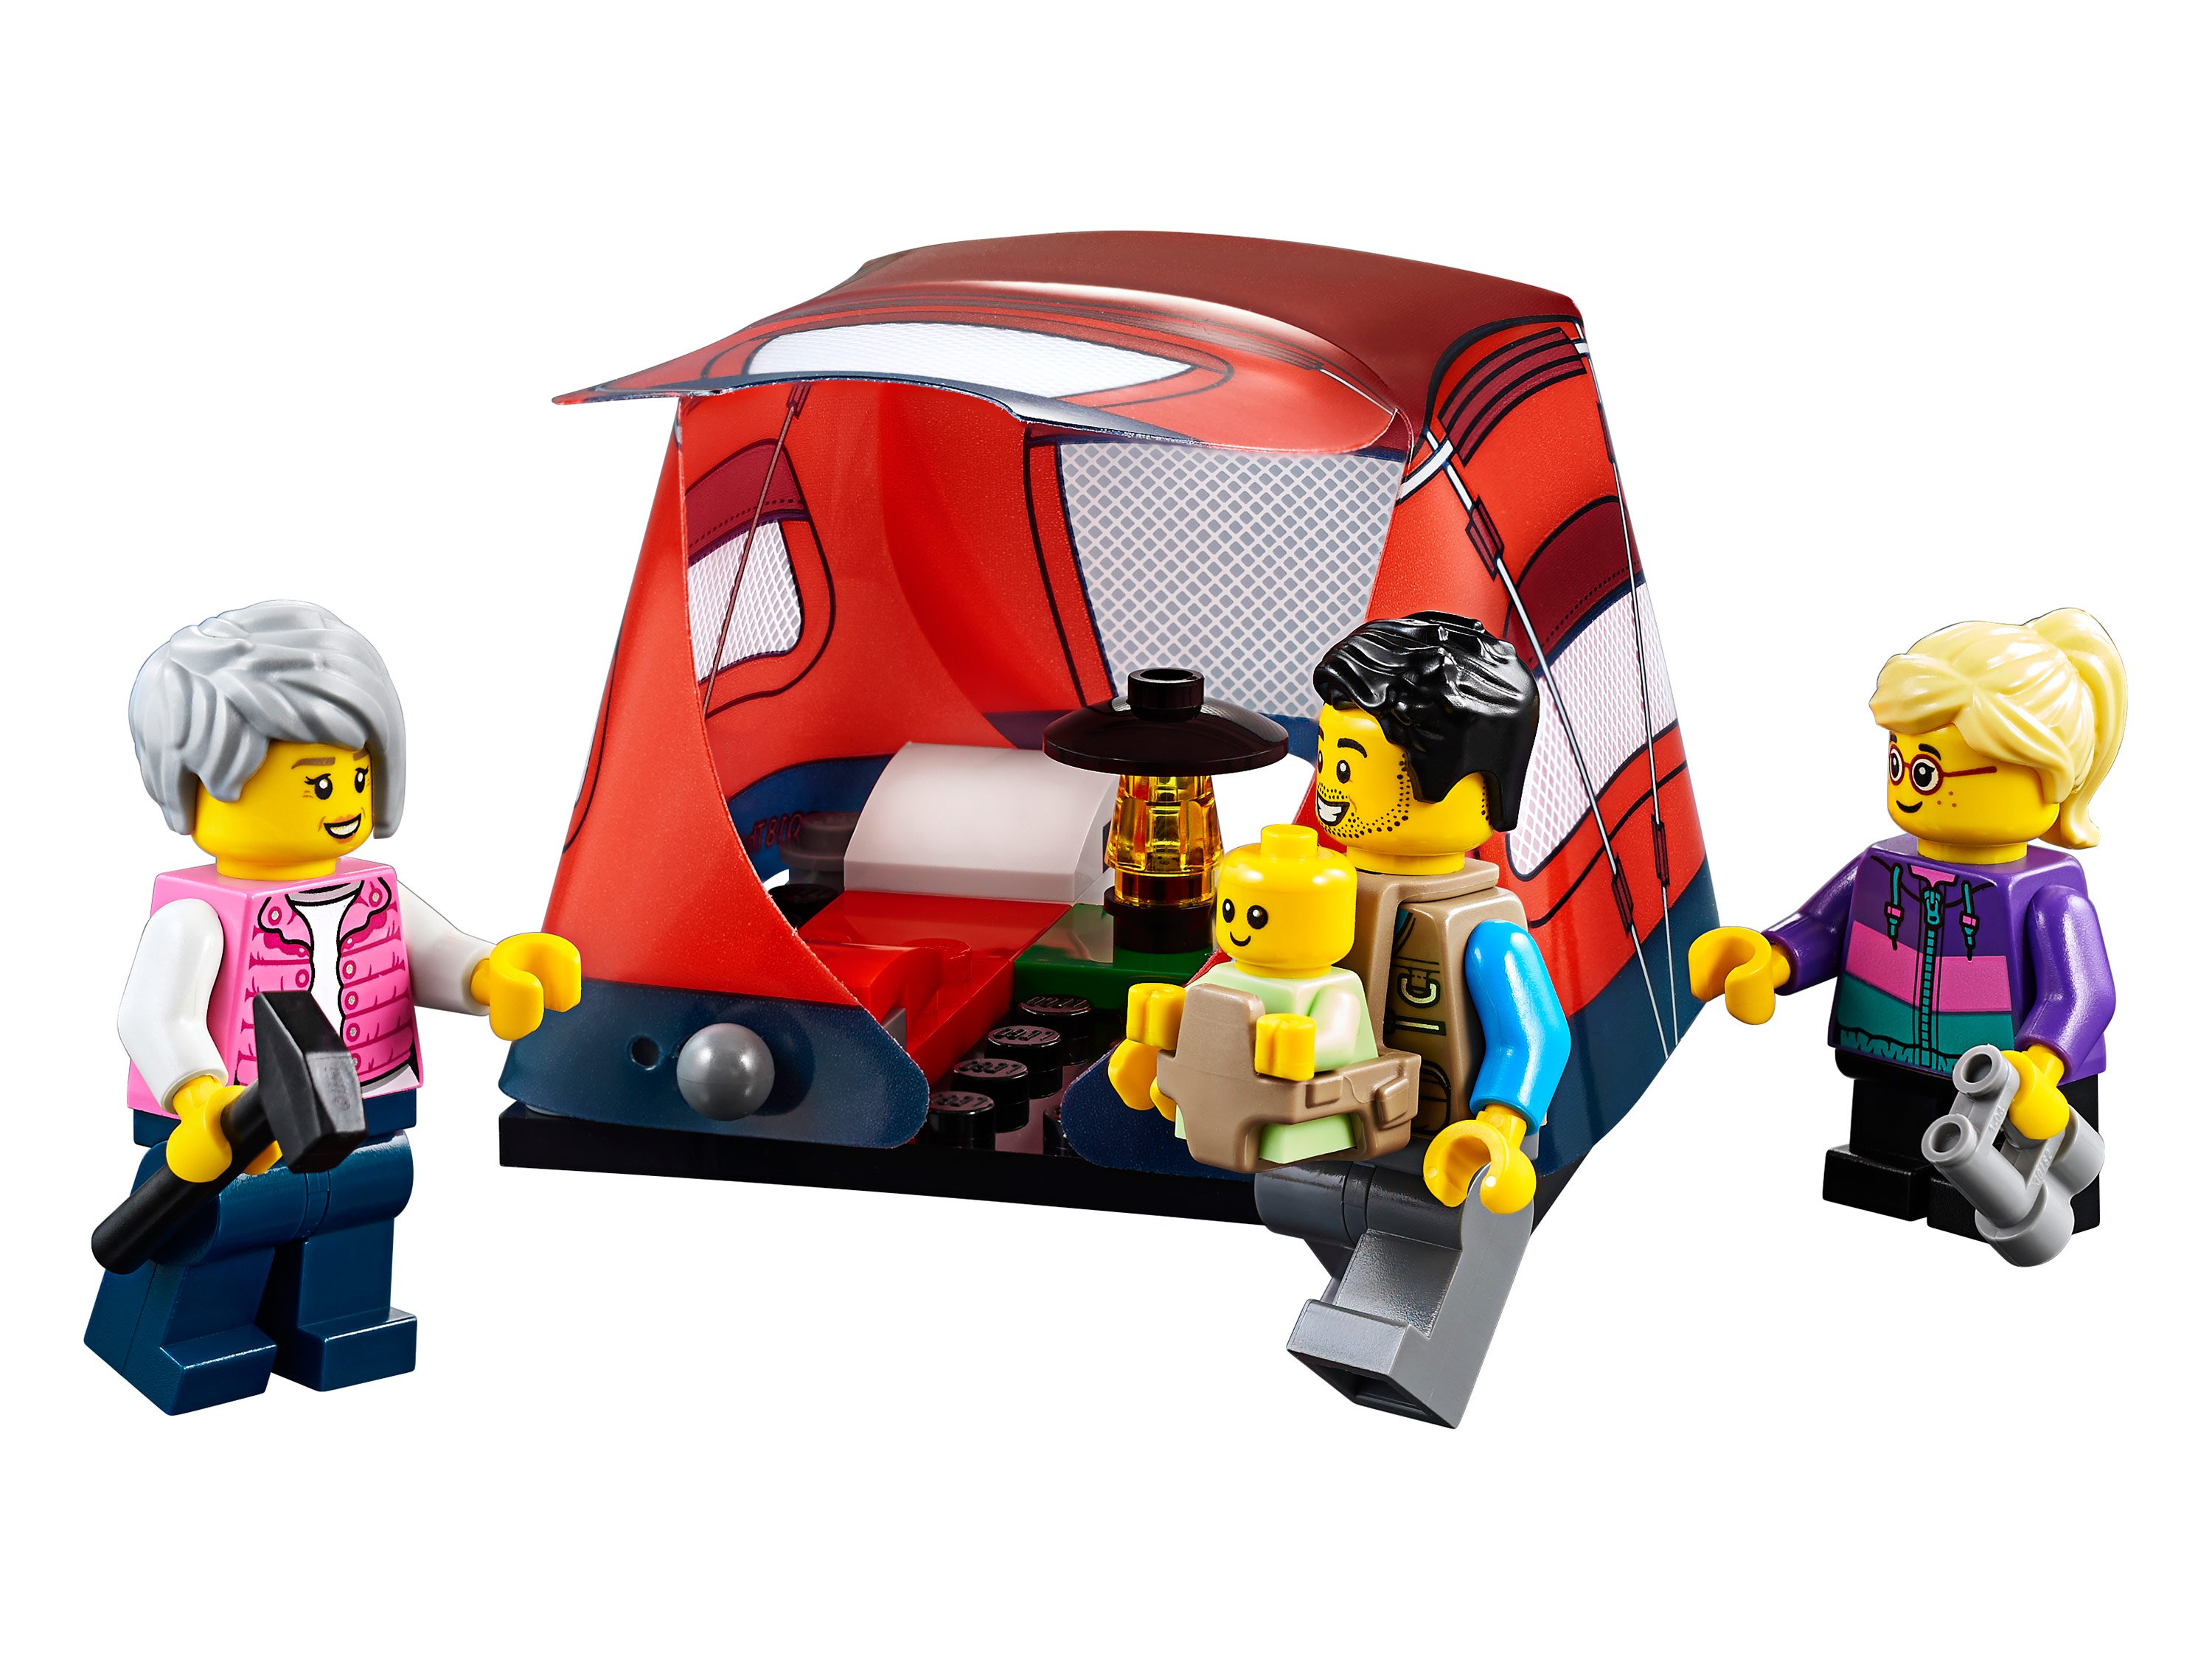 Lego City 60202 Любители активного отдыха